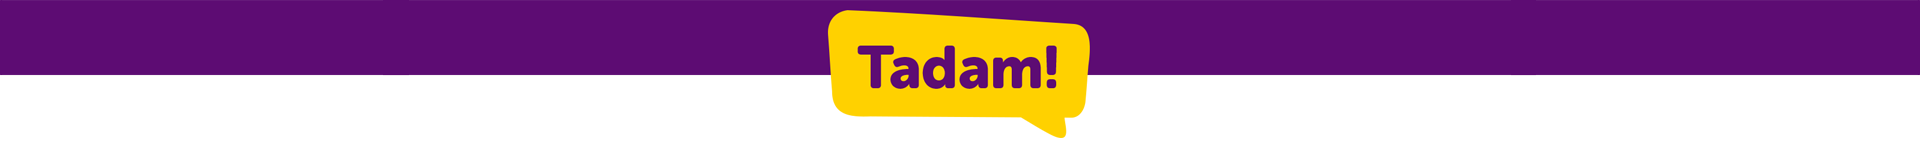 Tadam_header